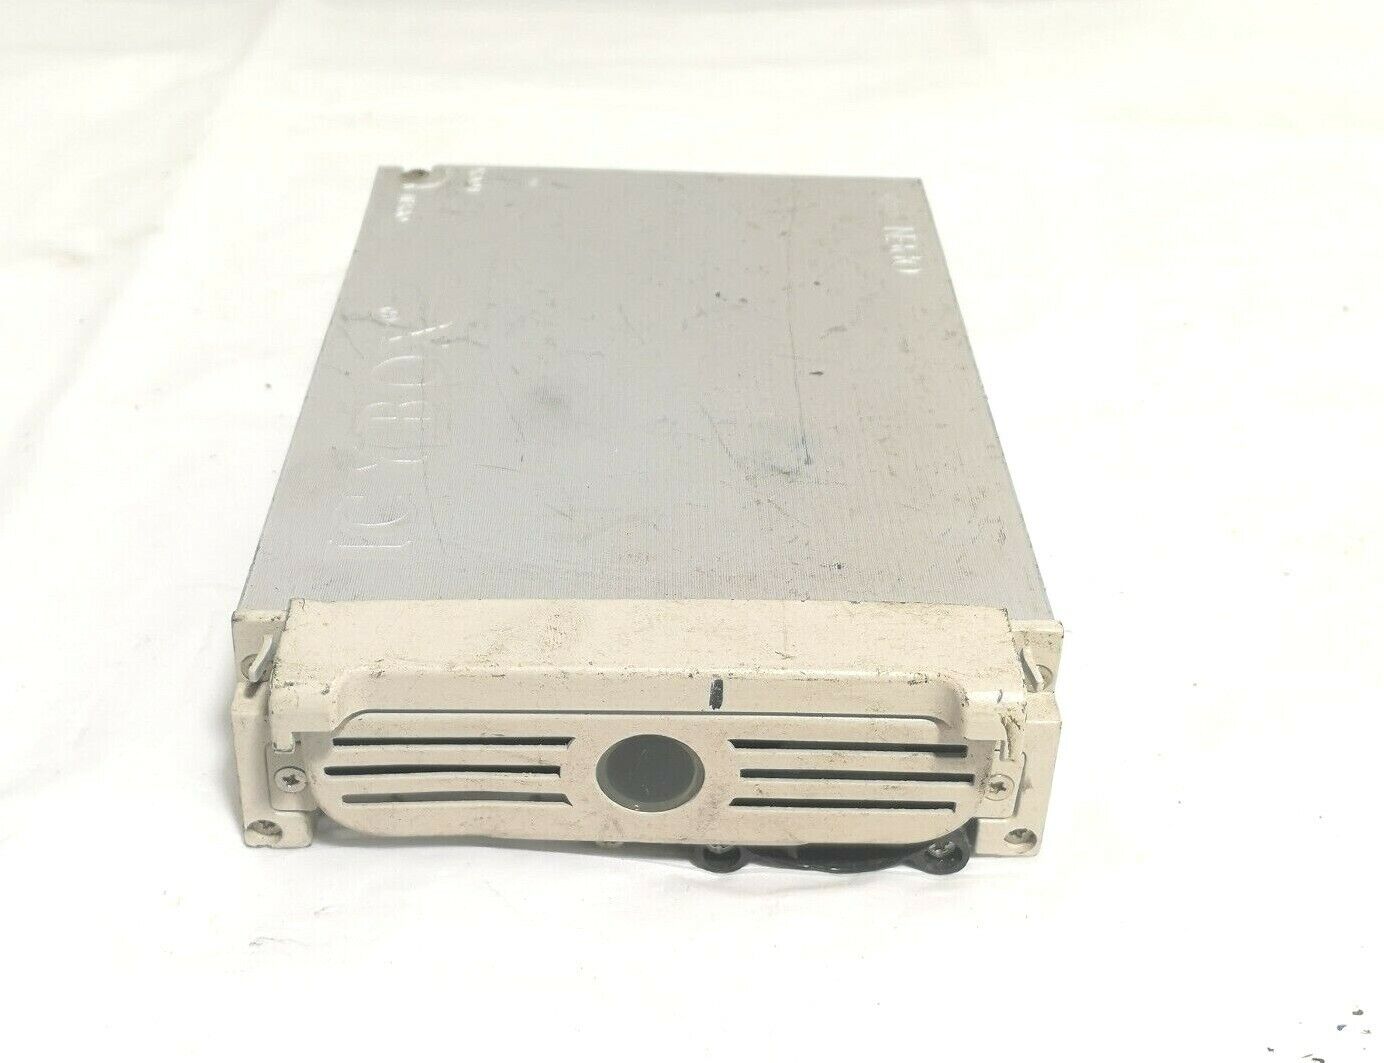 WD740ADFD Western Digital Raptor SATA Enterprise Hard Drive in ICYBOX Case READ